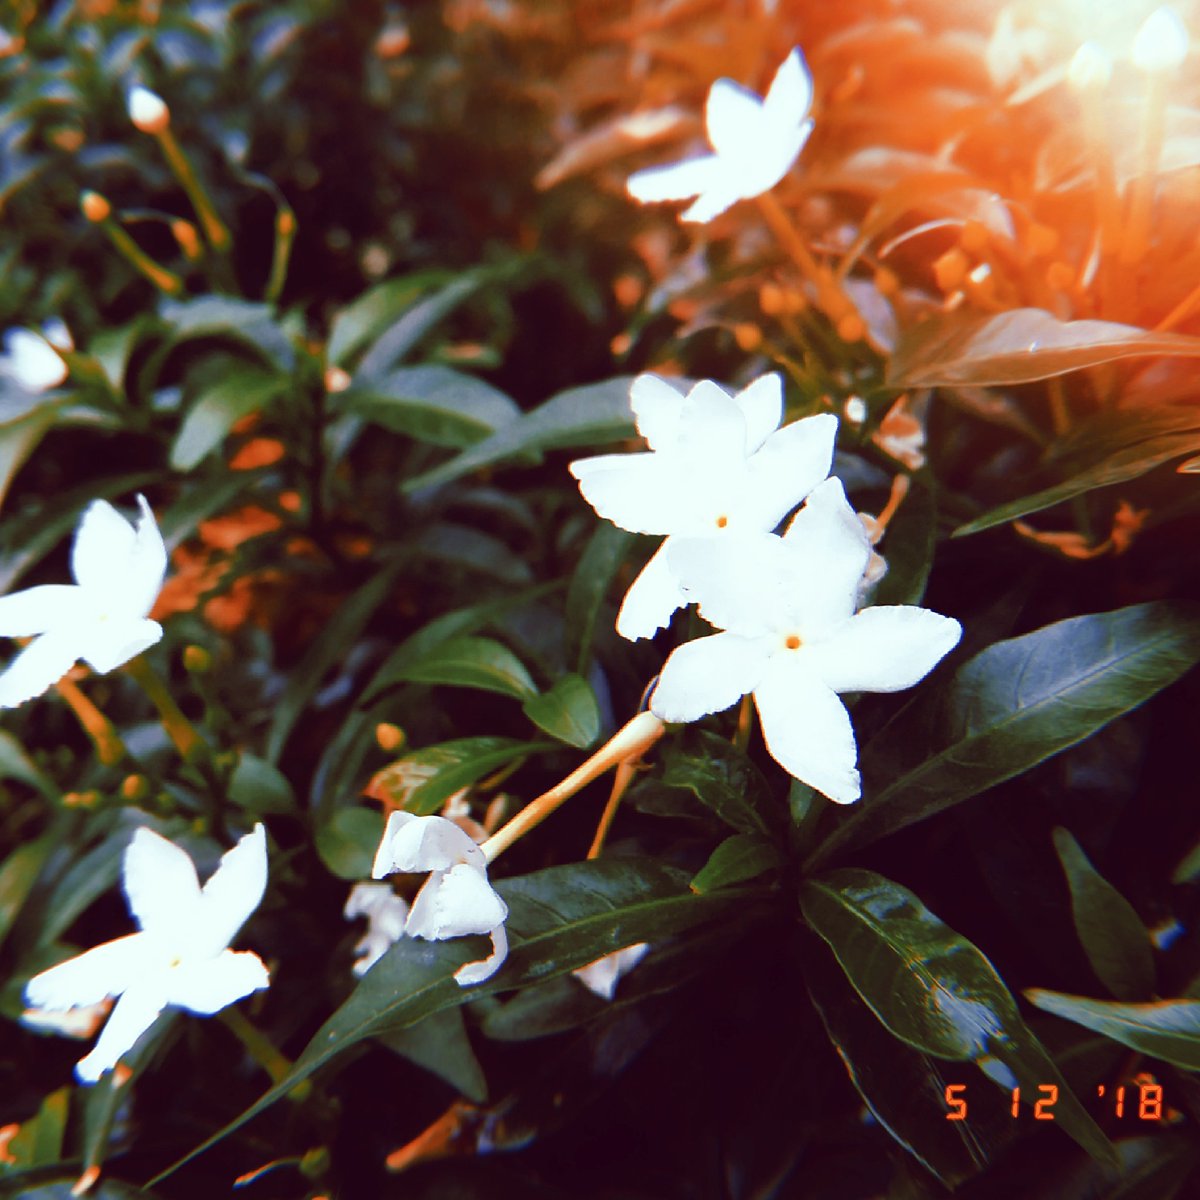 #flowersturk #kings_flora #flowerporn #tgif_nature #flowerstalking #awesome_photographers #nature_sultans #flowerstarz #ptk_flowers #superb_flowers #floralstyles_gf  #macro_mood #flowersandmacro  #vscophilippines #travelph #comeseeph #itsmorefuninthephilippines #fujifil #fujifeed